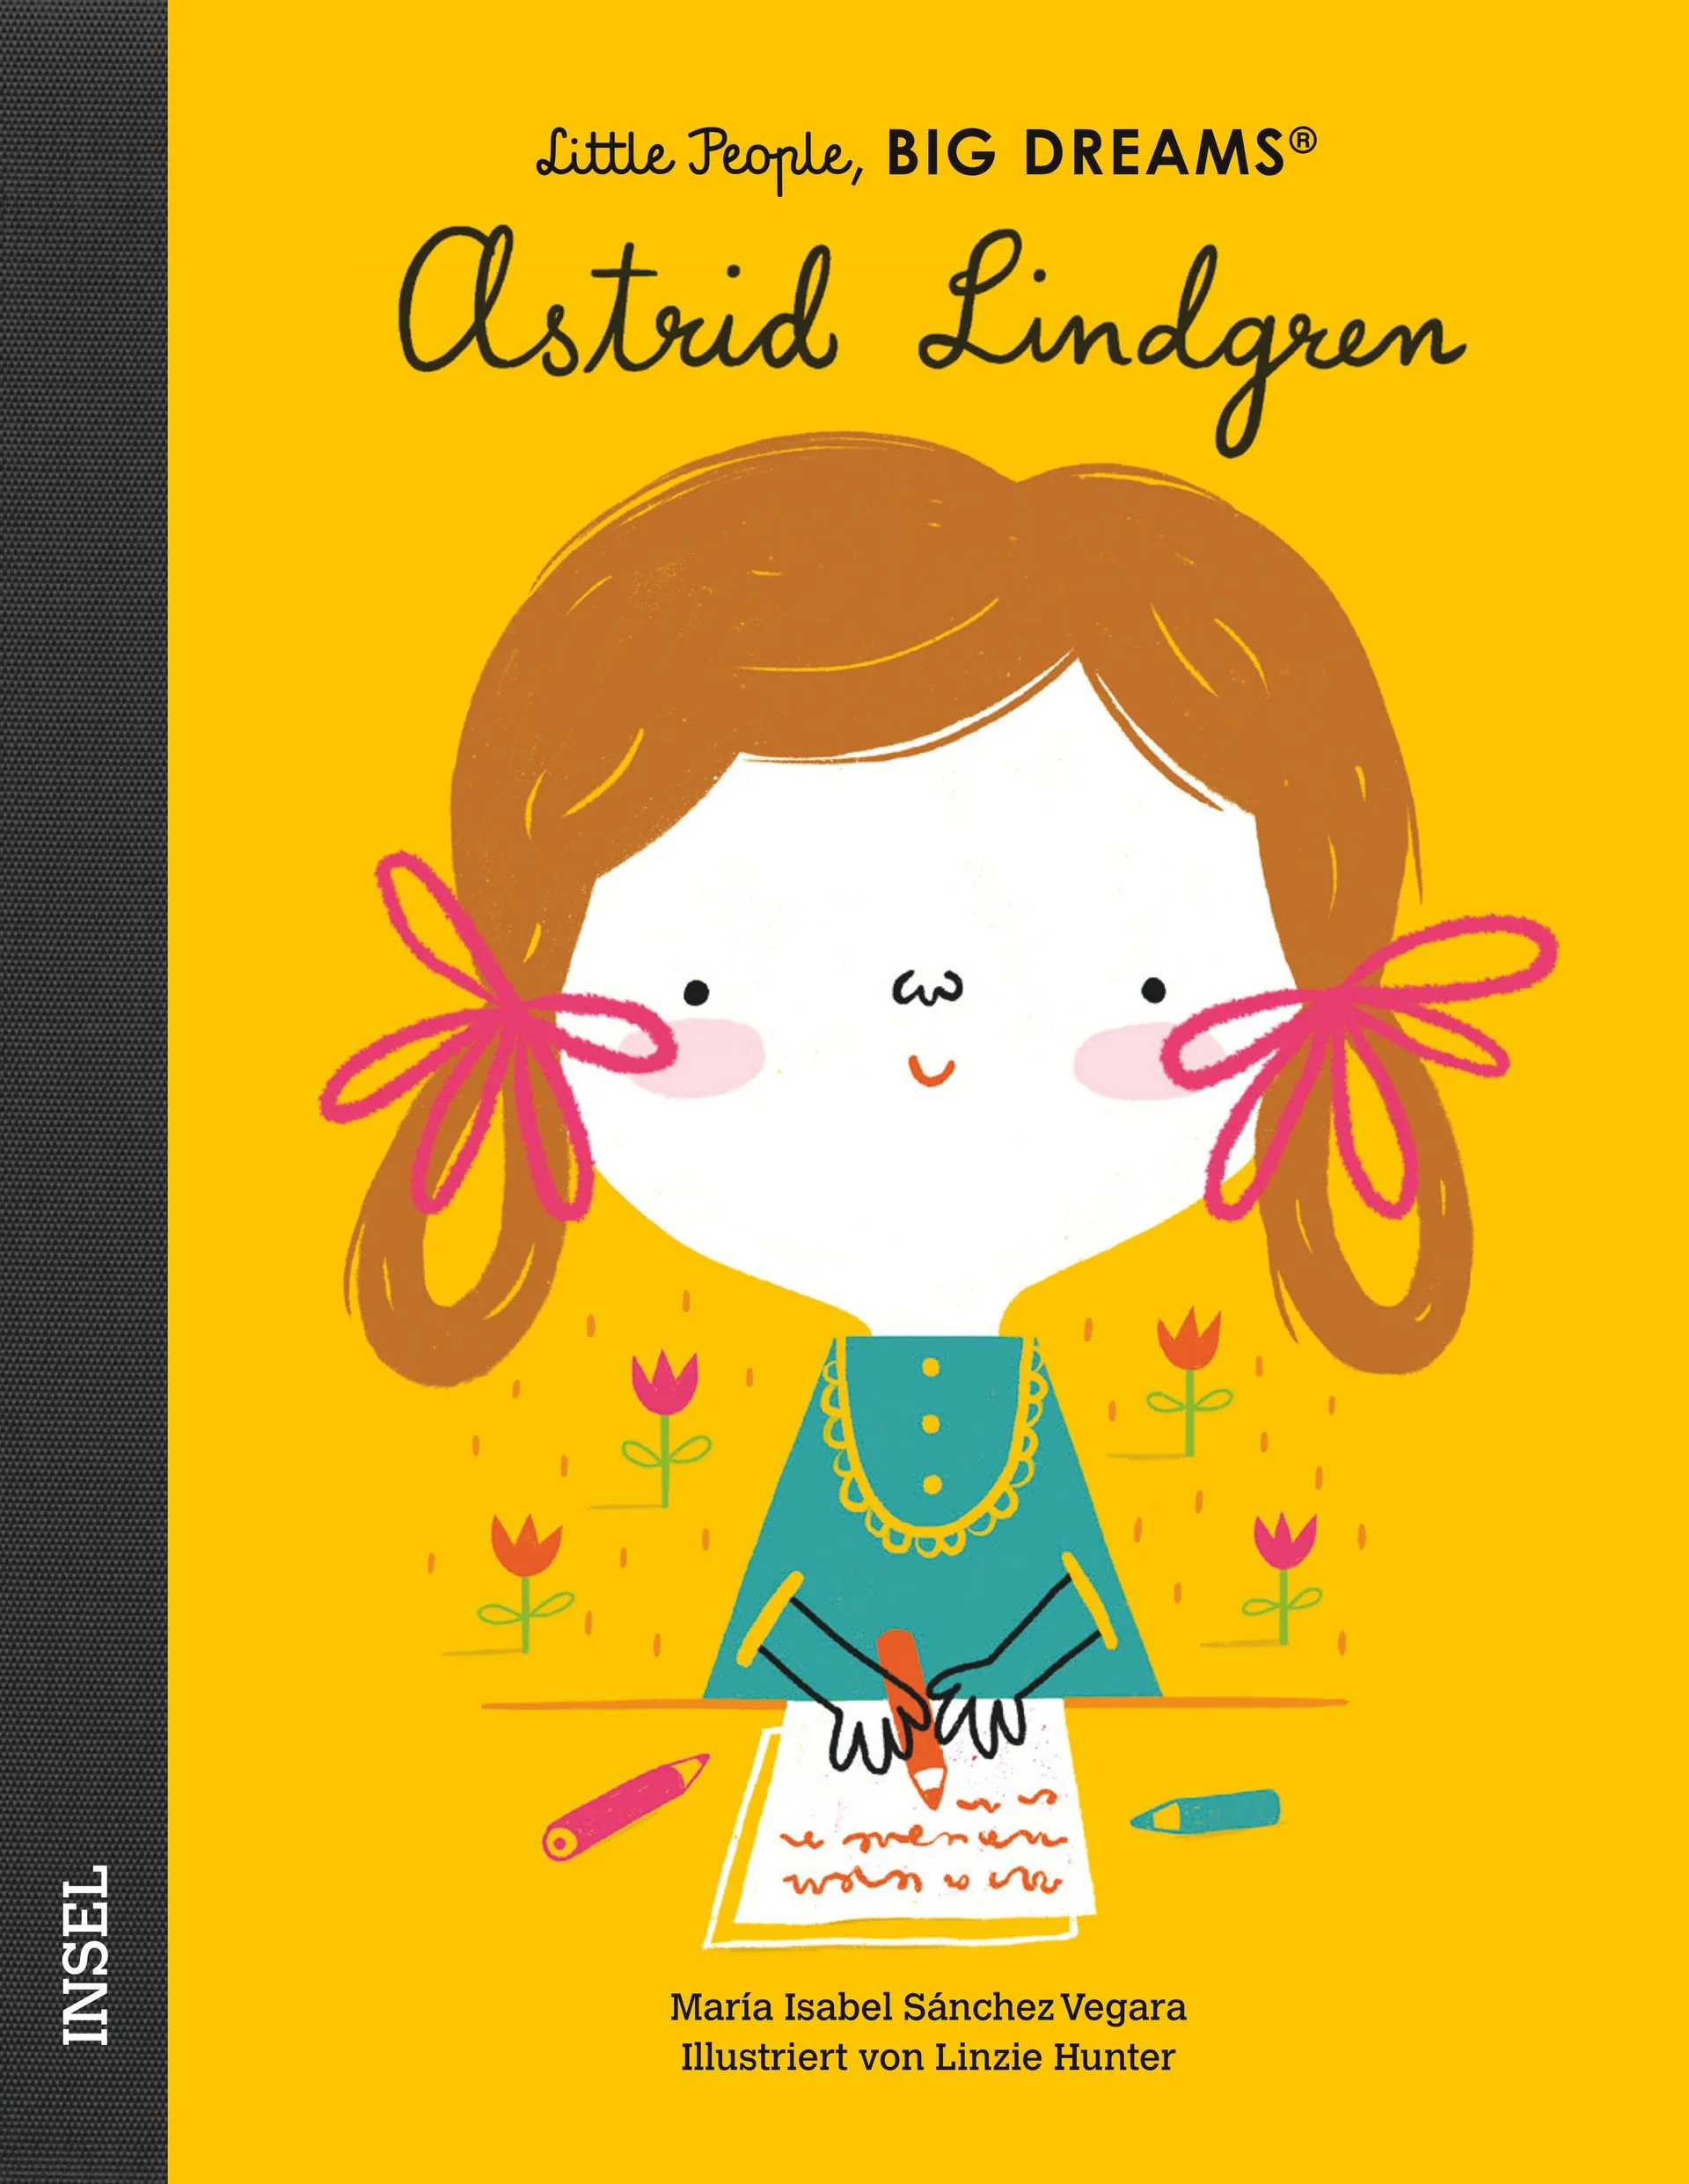 Little People, big dreams - Astrid Lindgren